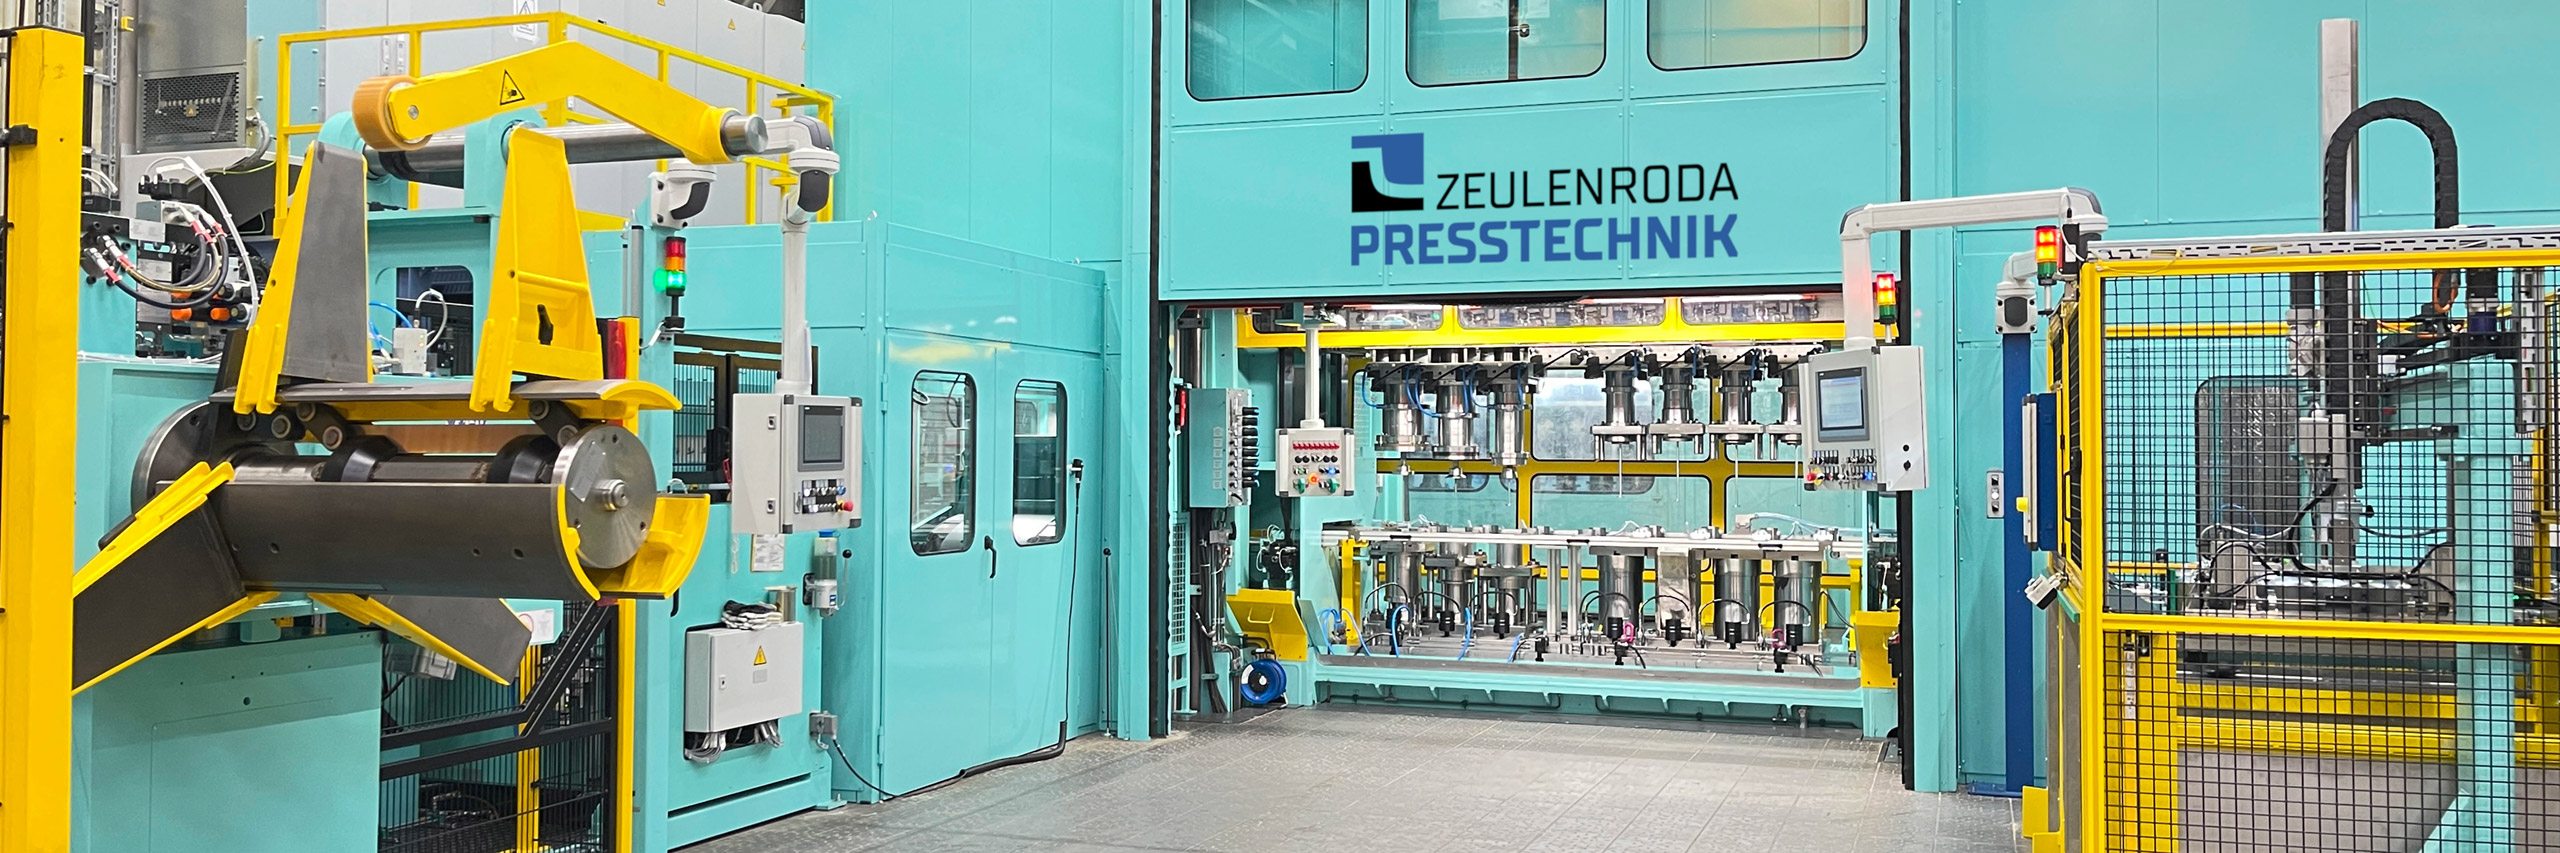 Maschinen in Maschinenhalle | Zeulenroda Presstechnik